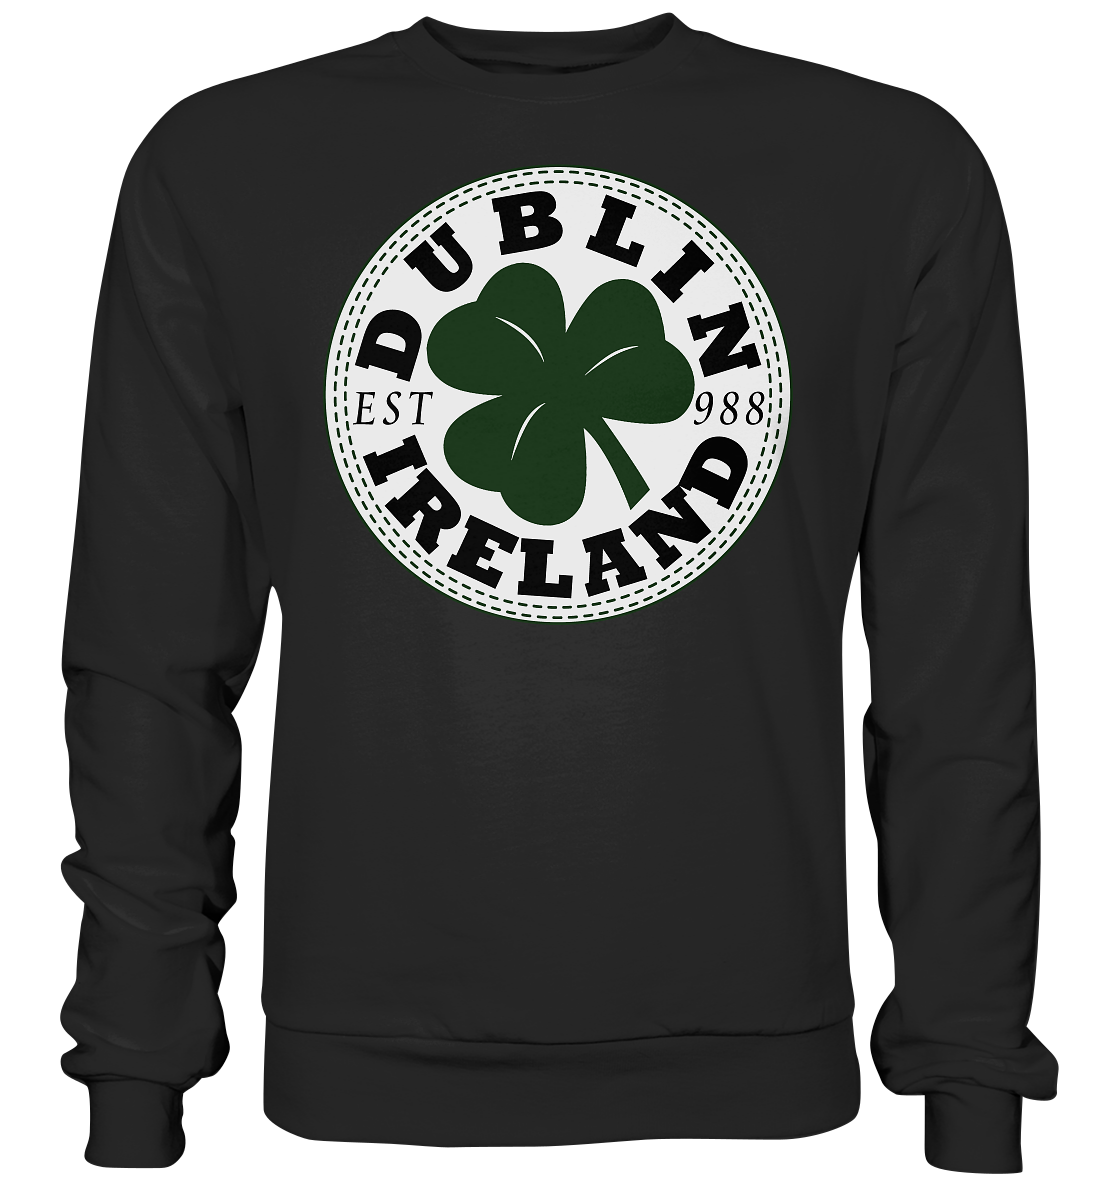 Dublin "Ireland / Est 988" - Premium Sweatshirt